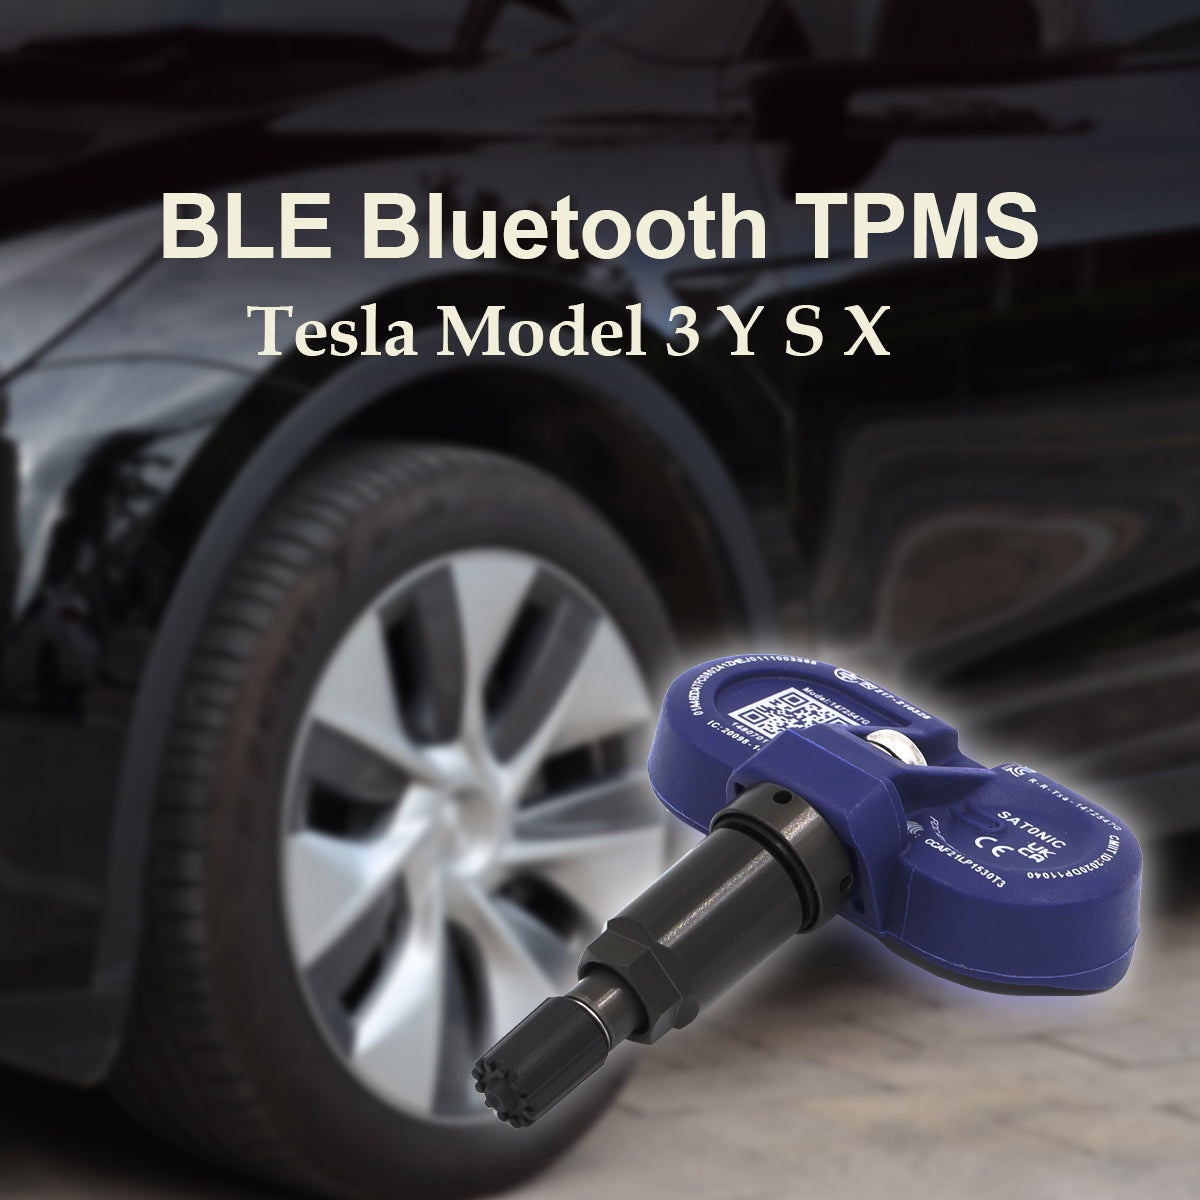 Tesla BLE Bluetooth TPMS